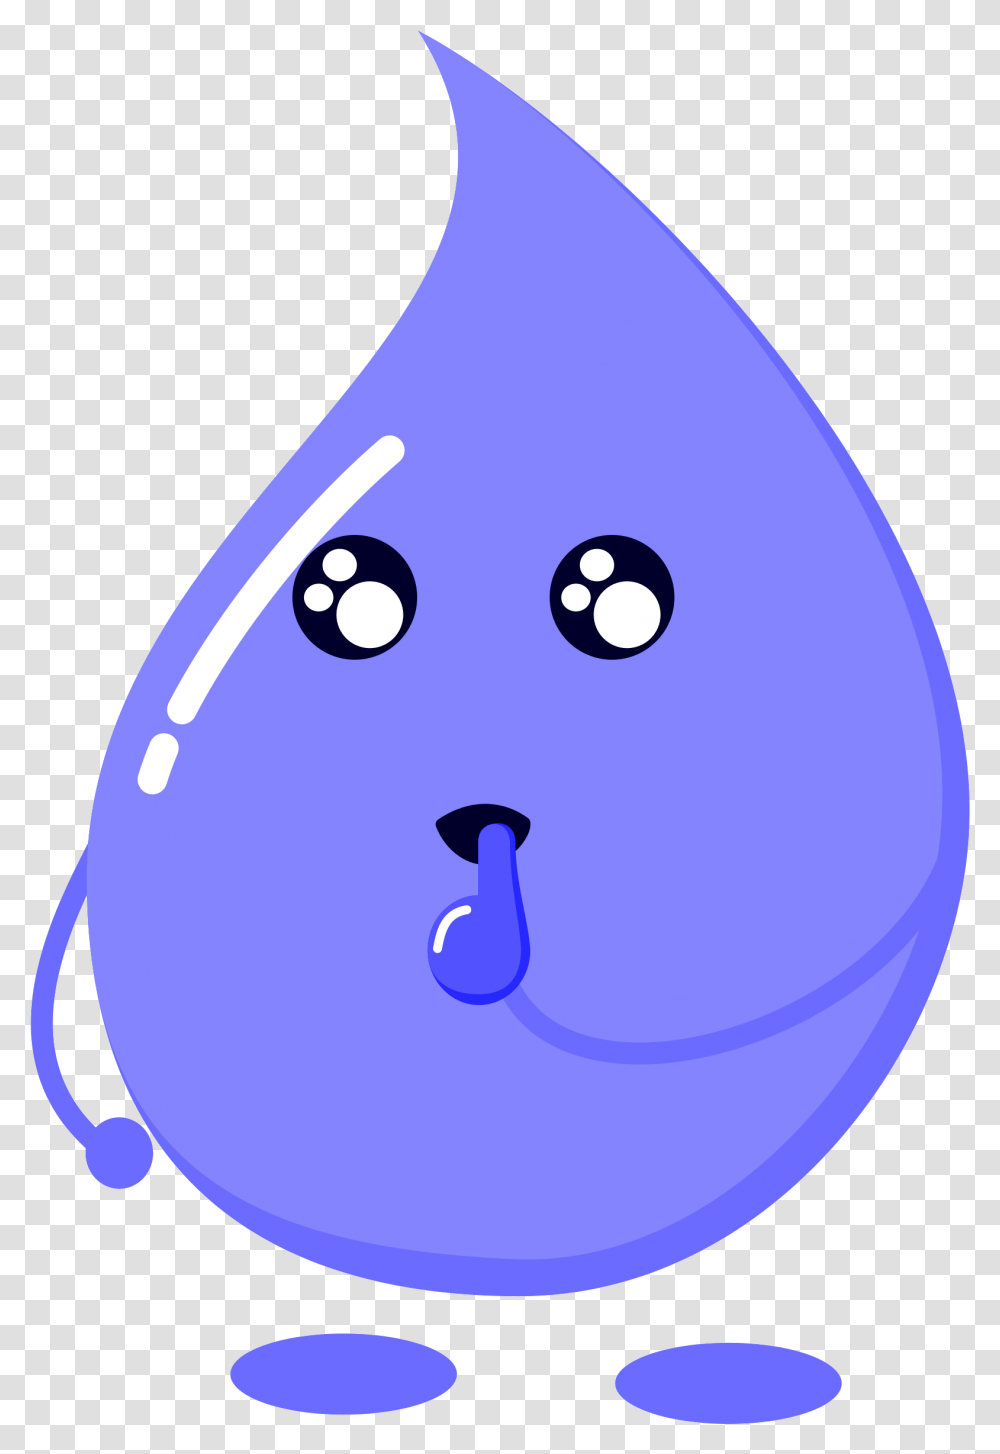 Water Drop Drops Clipart Droplet Wonder Big Image Drop Water Cartoon, Egg, Food, Easter Egg Transparent Png